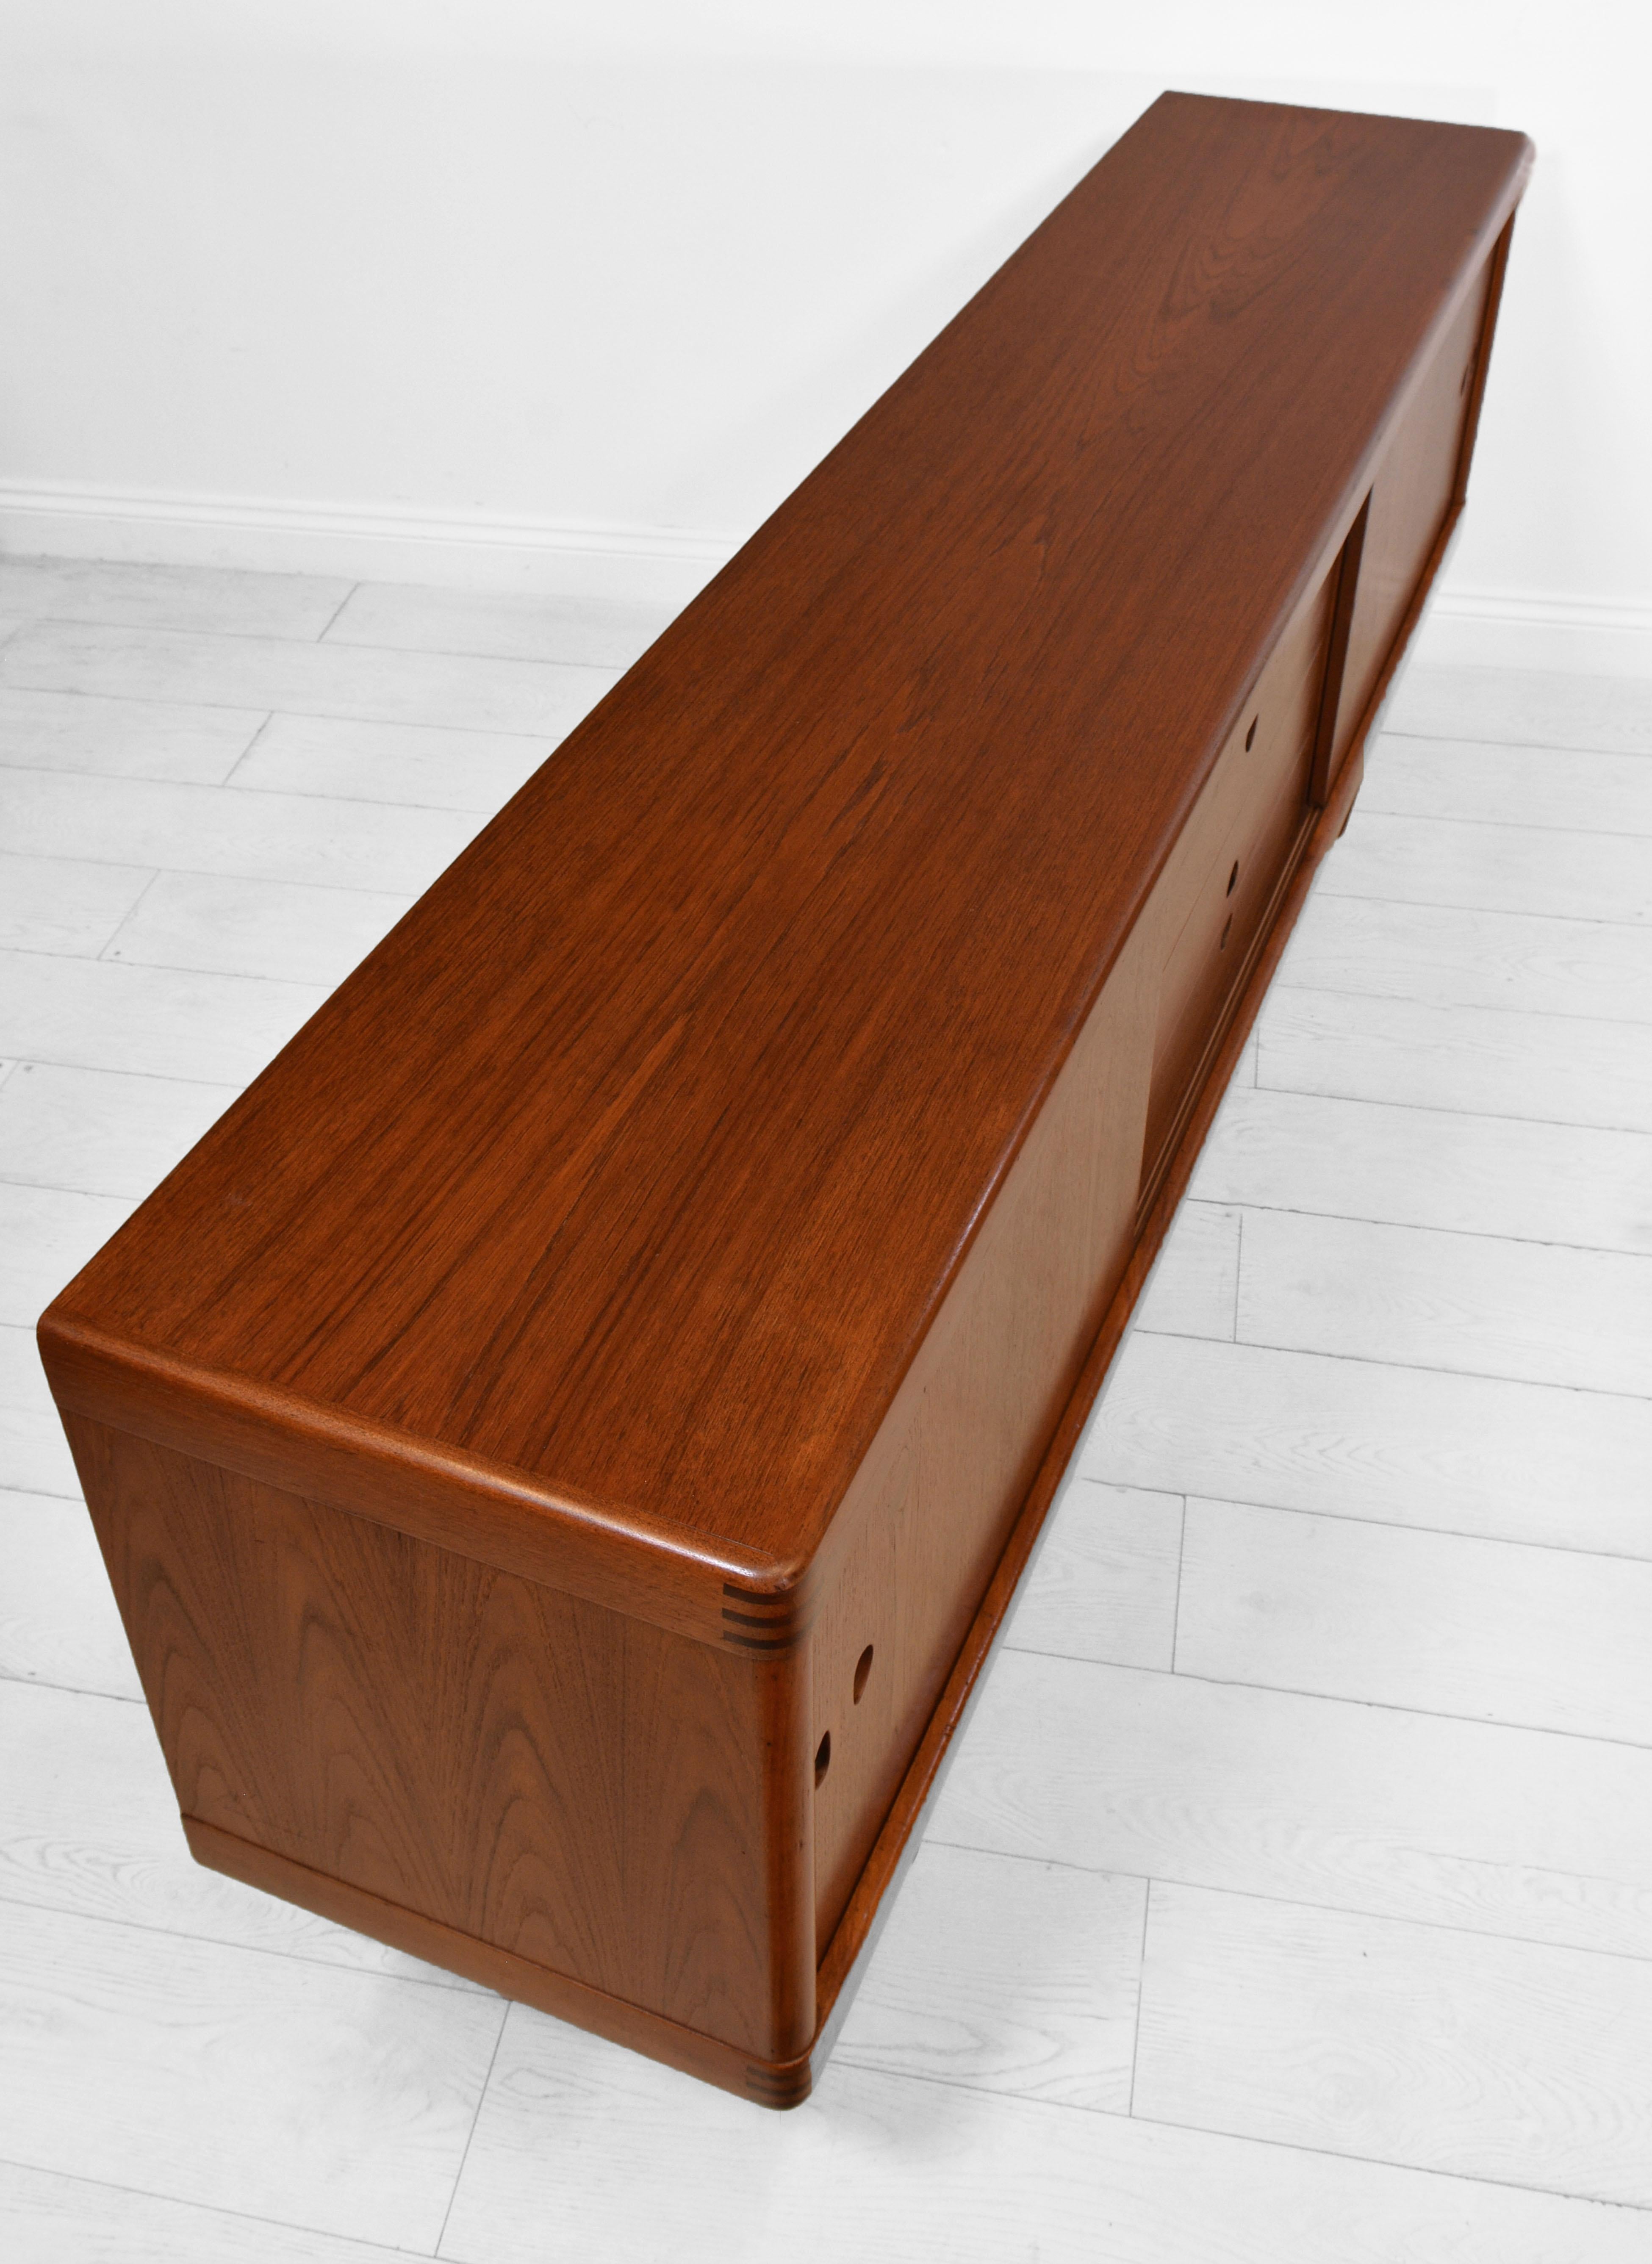 Mid-20th Century Danish Teak Sideboard Credenza Designed by H.W. Klein For Bramin 1960's